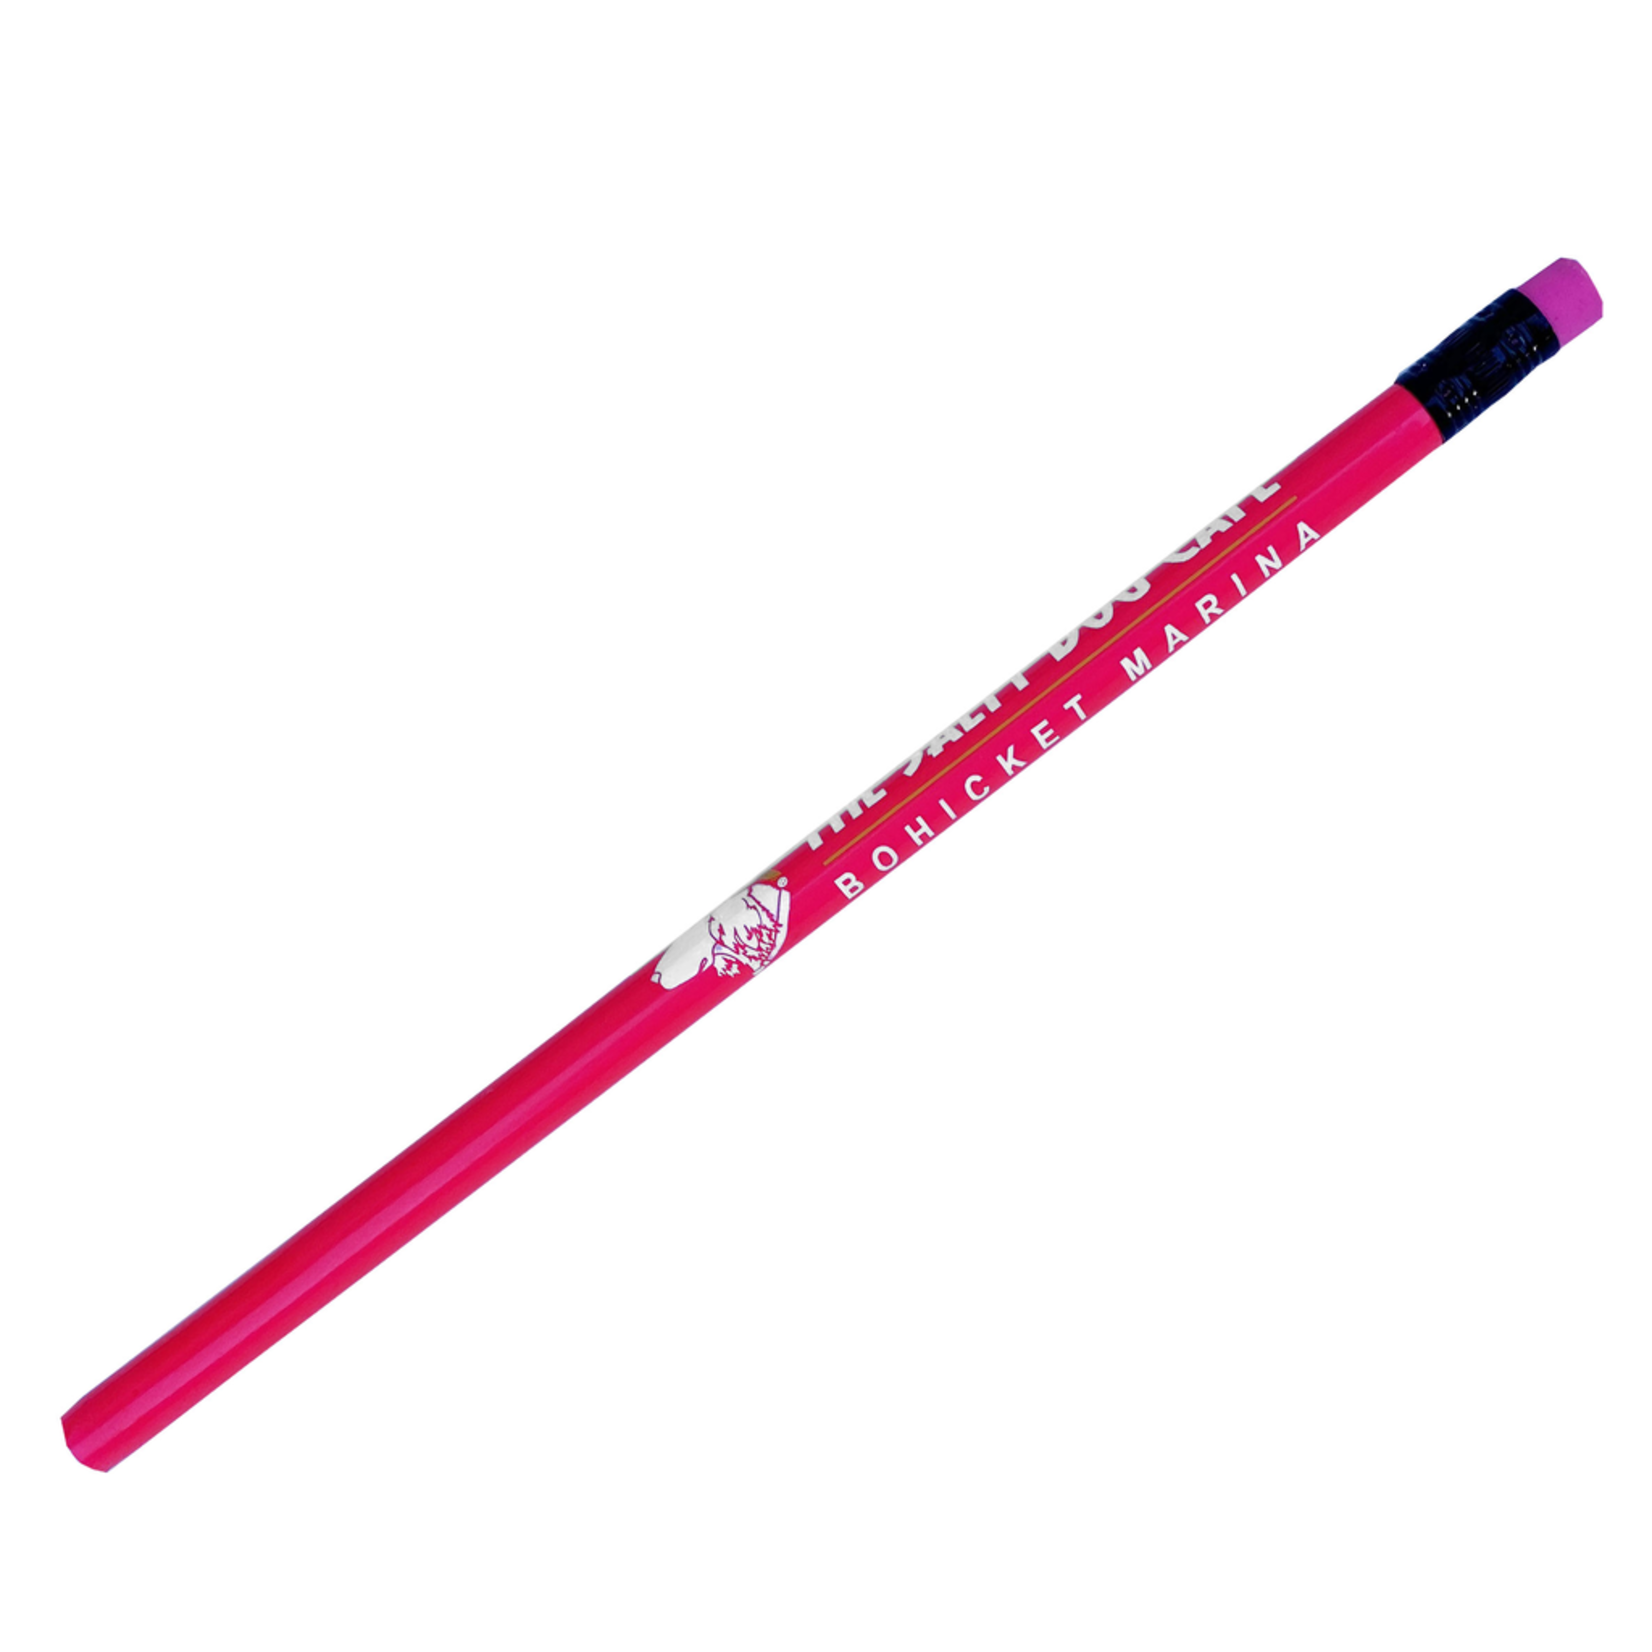 Charleston Pencil - Neon, Flamingo Pink